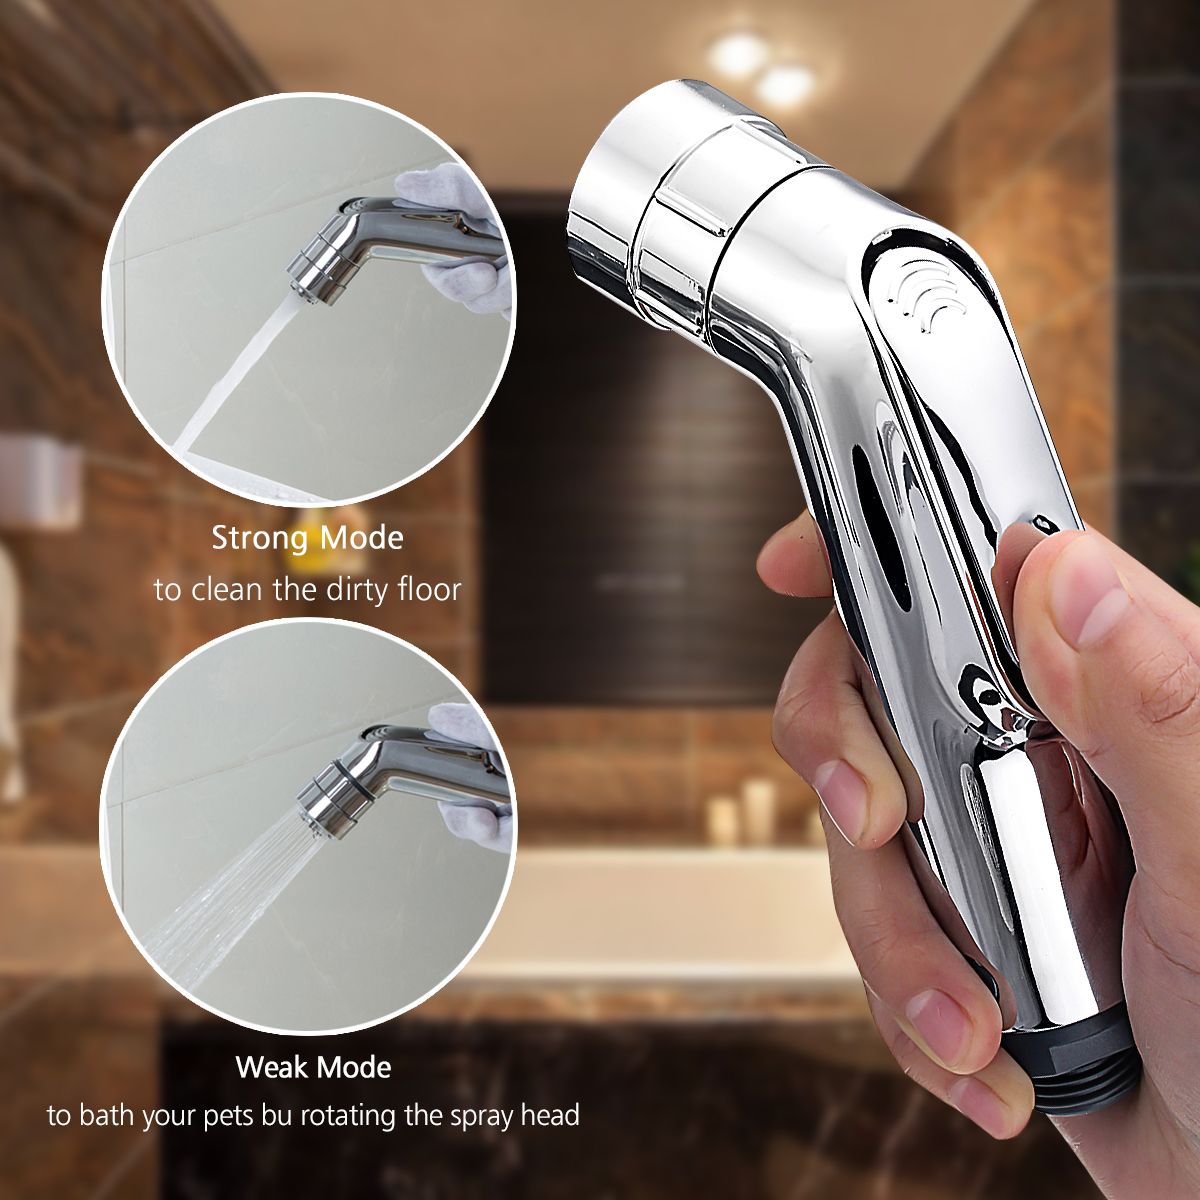 Bathroom-Handheld-Bidet-Toilet-Adapter-Shower-Sprayer-Wall-Bracket-With-Holder-amp-Water-Hose-1345589